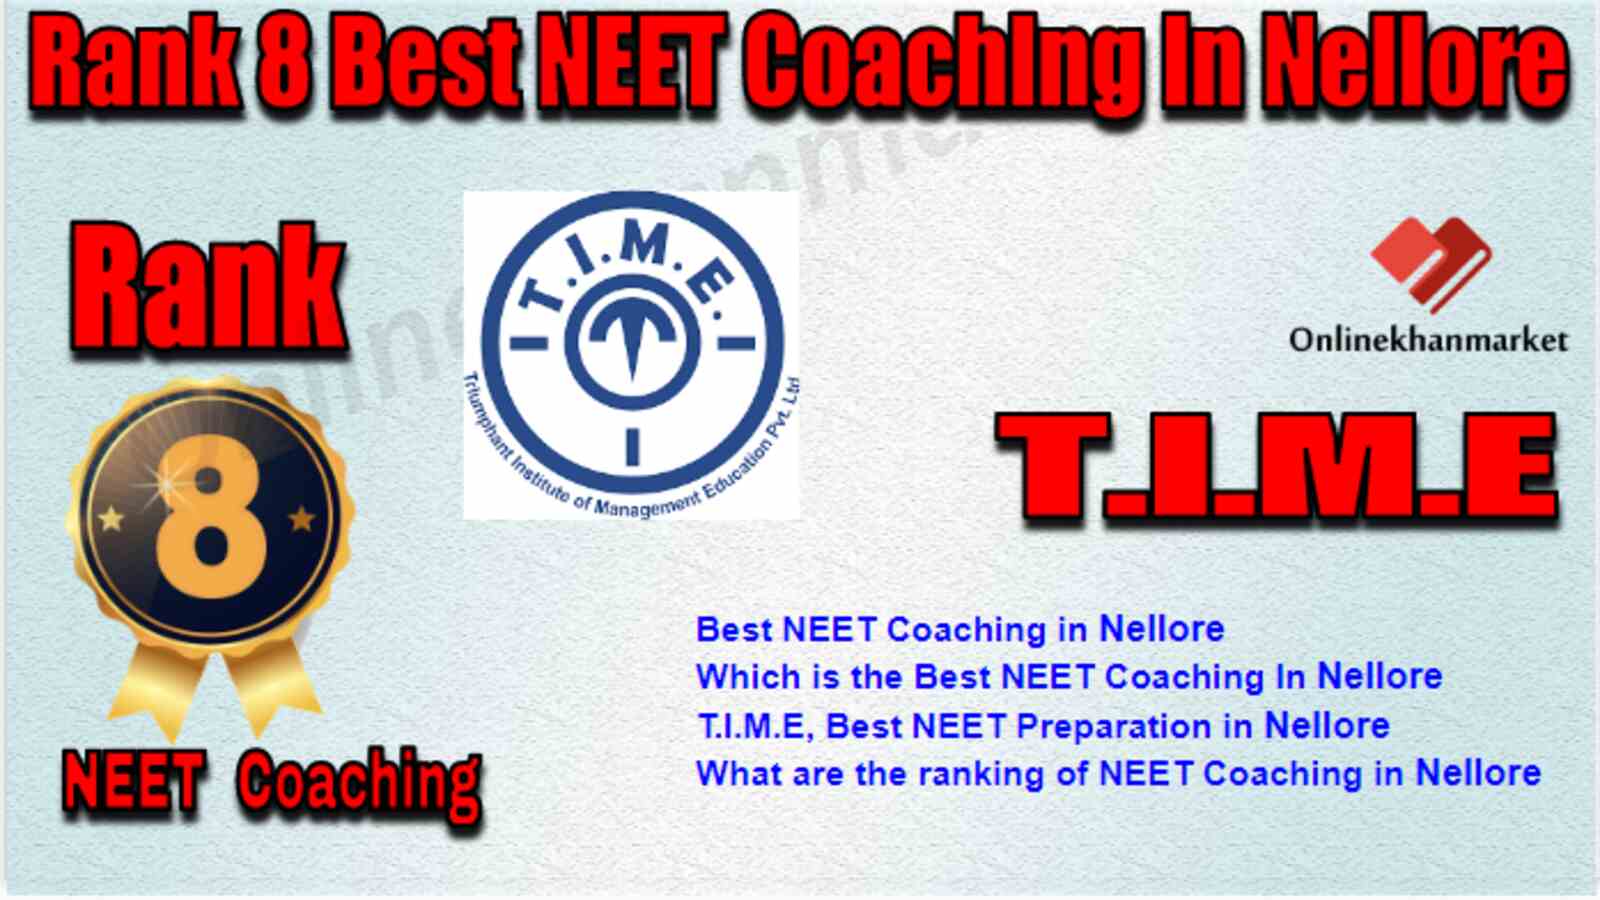 Rank 8 Best NEET Coaching in Nellore